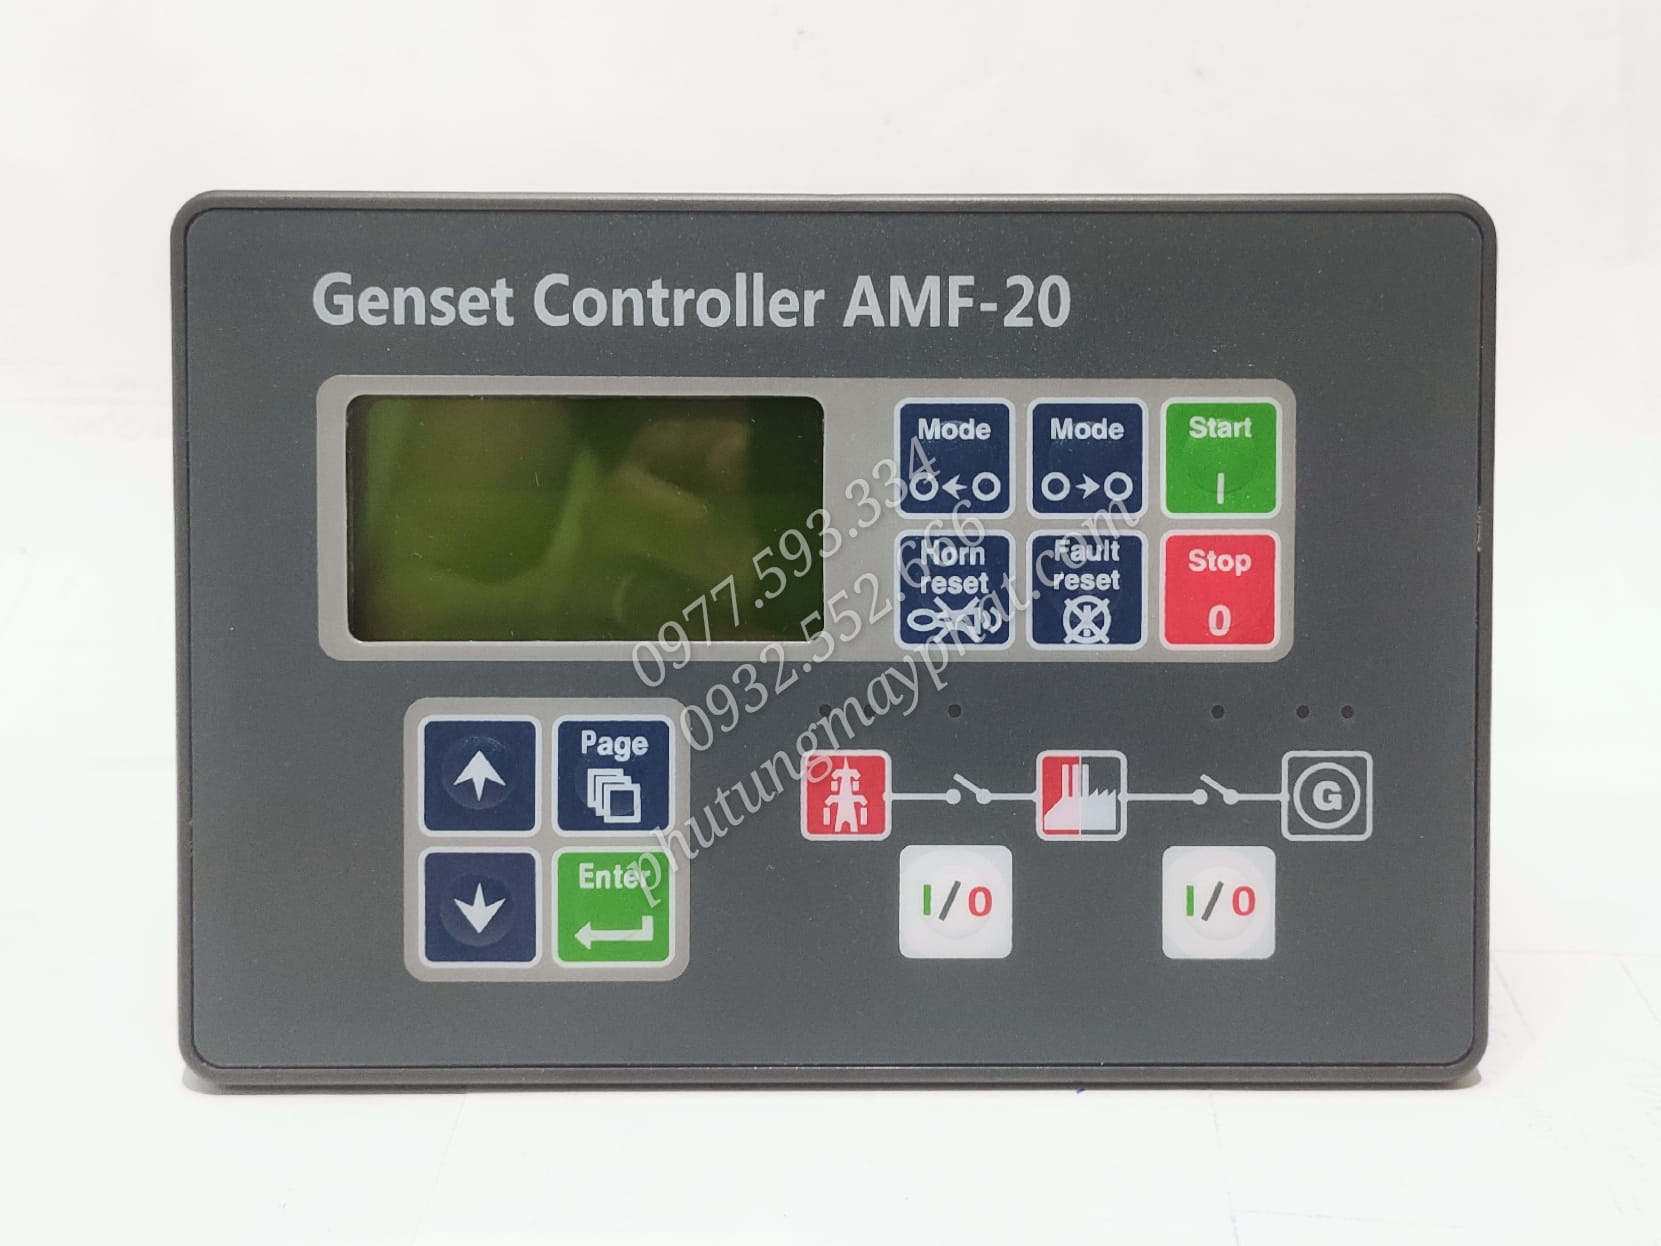 Genset Controller AMF-20